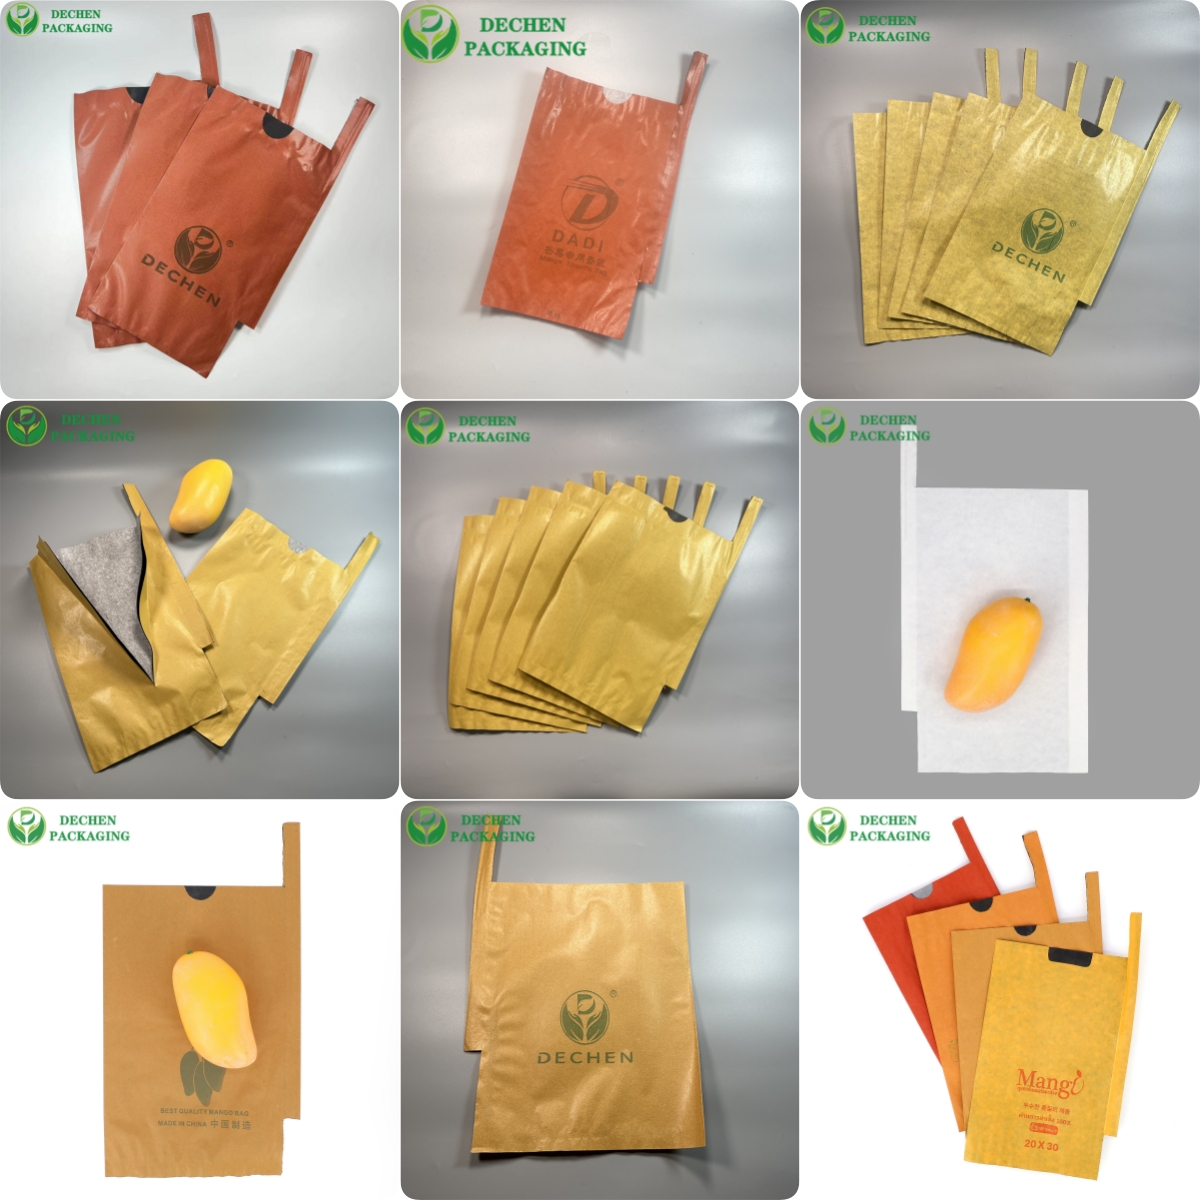 Dechen mango paper bags photo.jpg